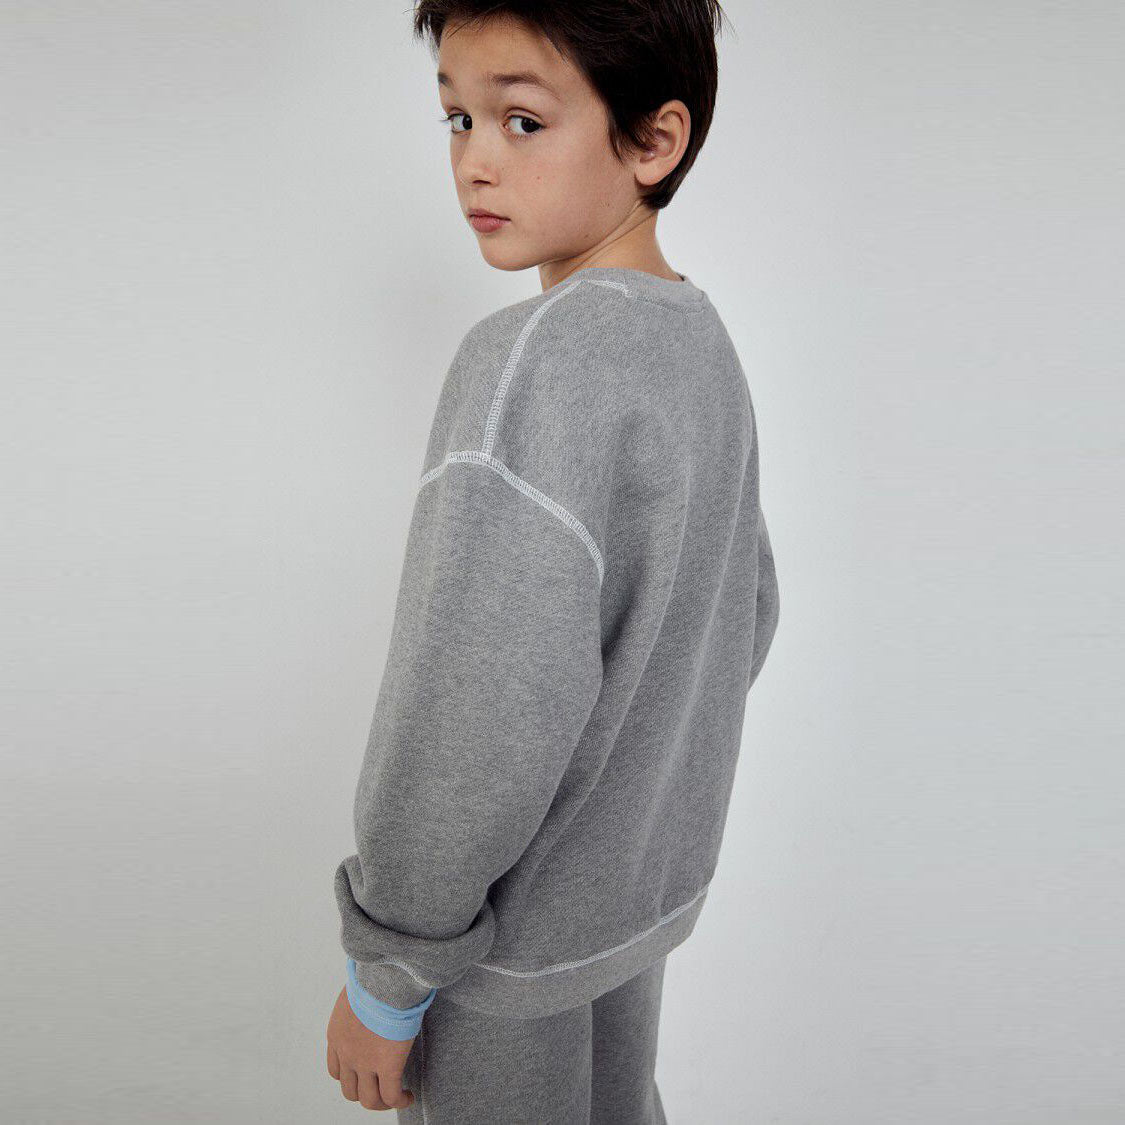 Boys & Girls Grey Cotton Sweatshirt